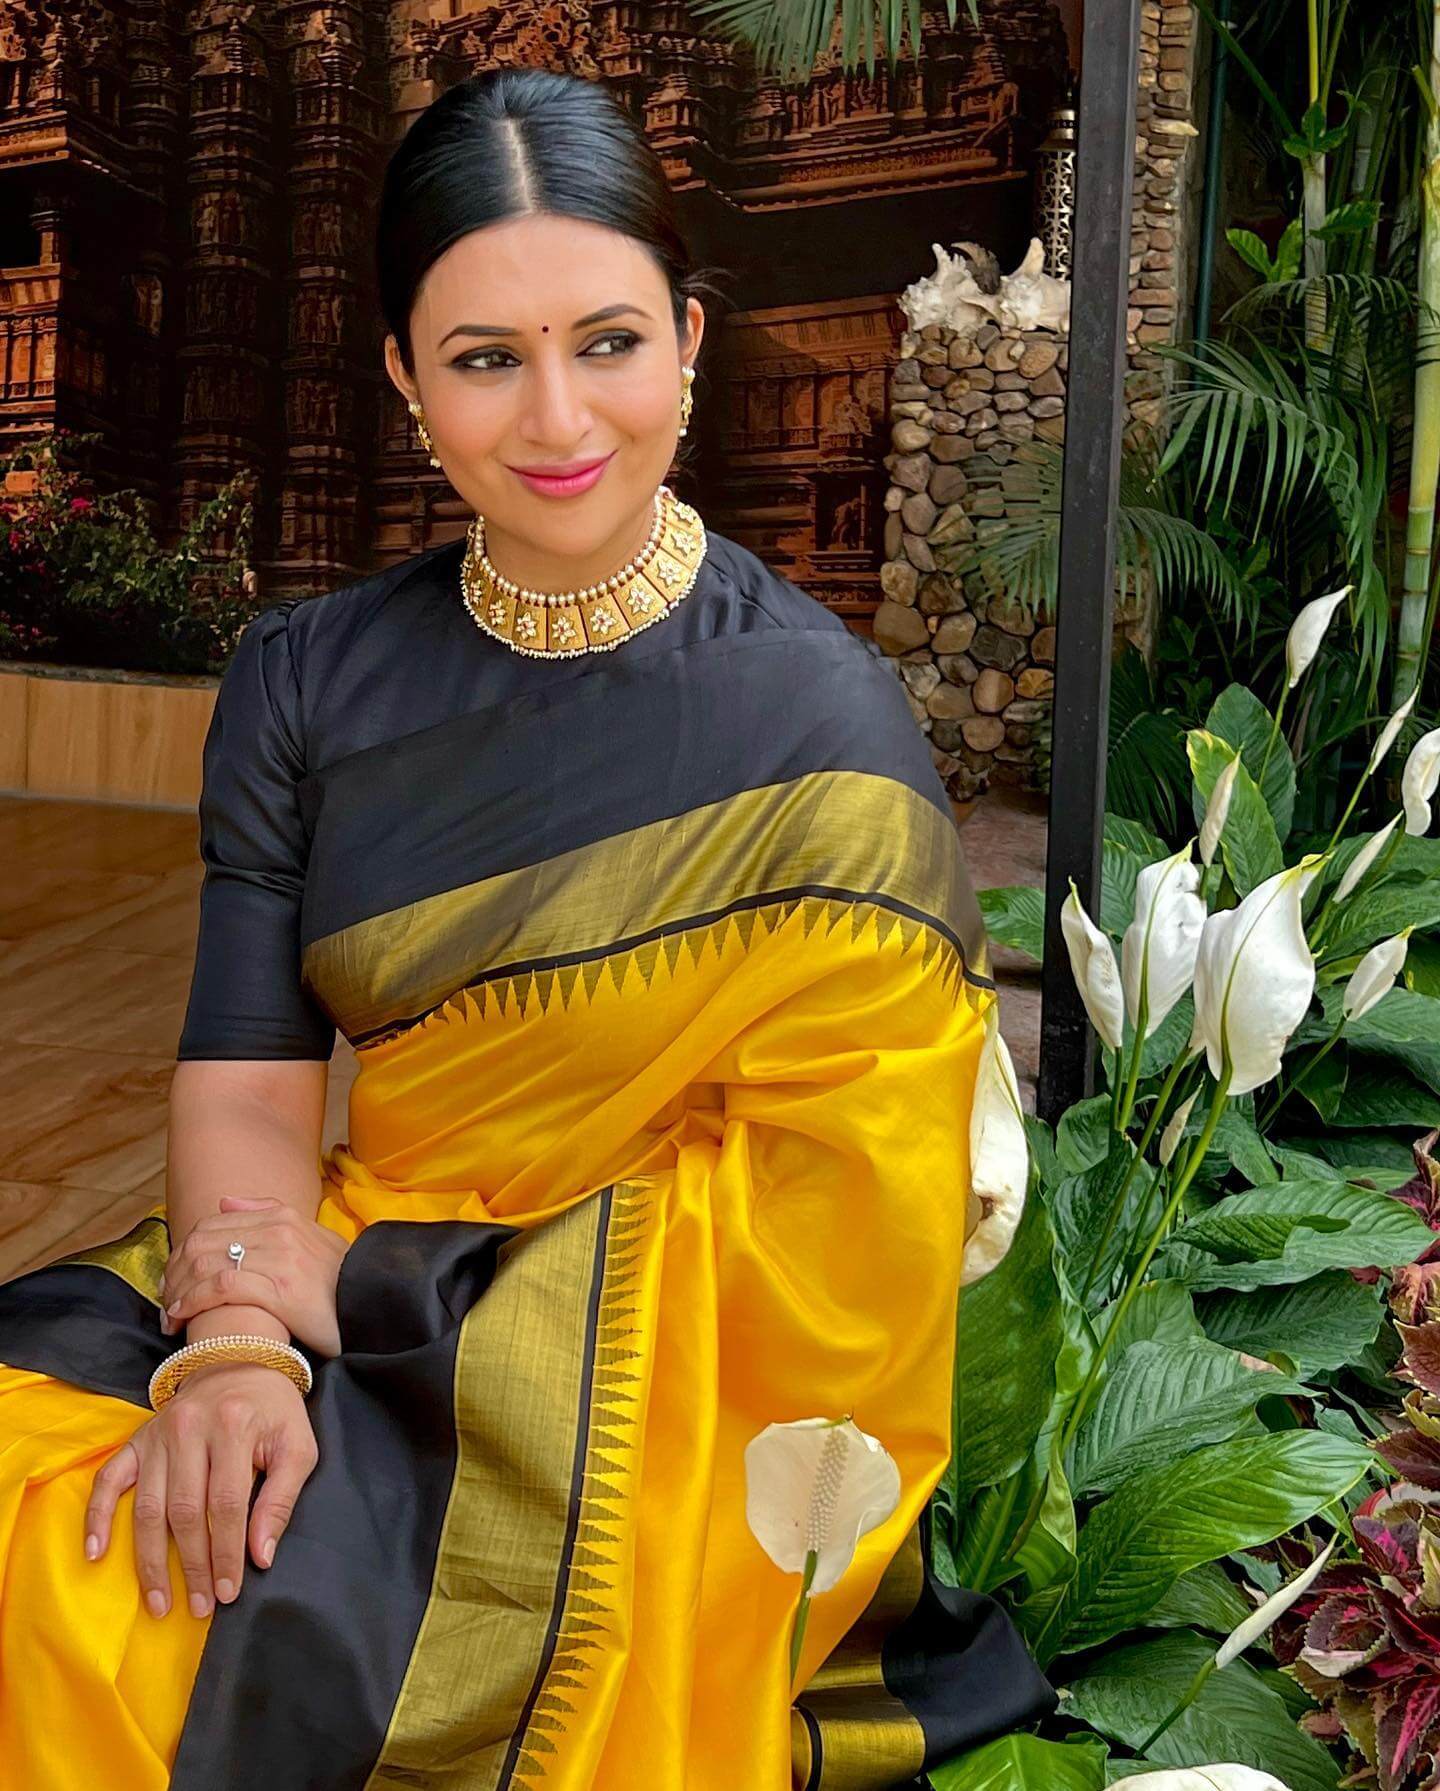 Sanskari Bahu Divyanka Tripathi In Yellow Saree Paired With Black Blouse With Sleek Hairstyle